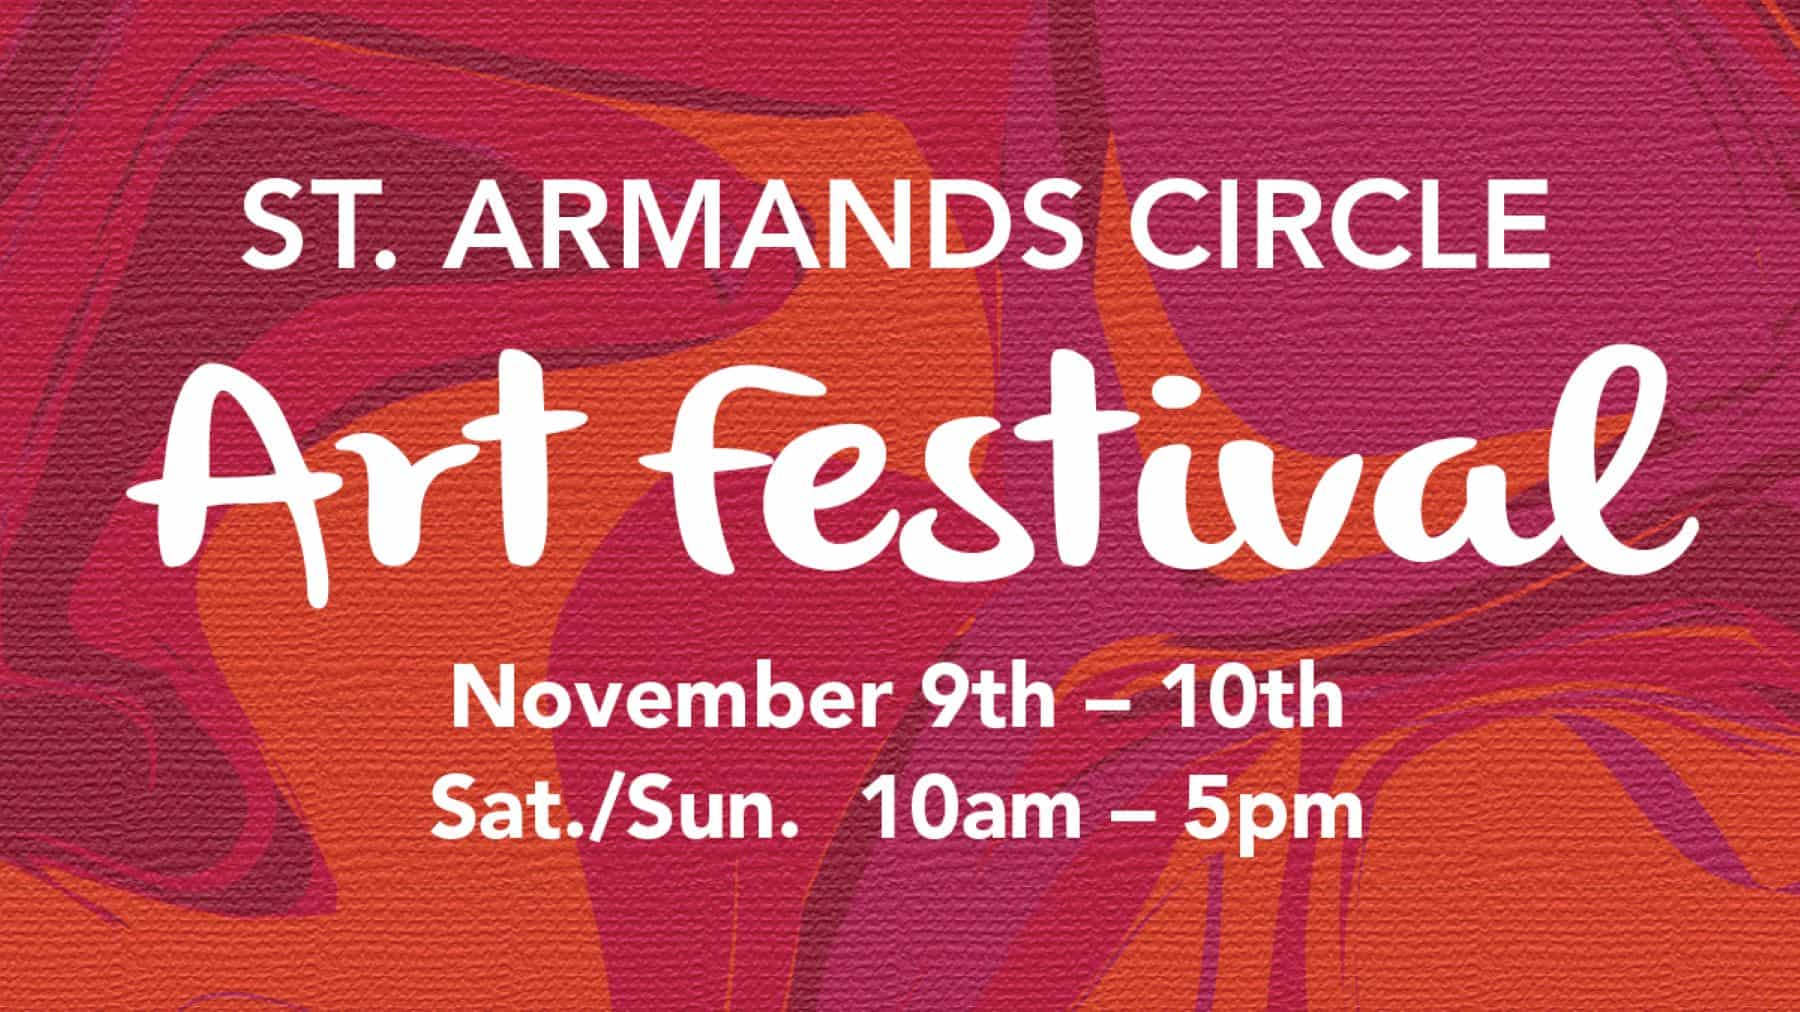 St. Armands Circle Art Festival